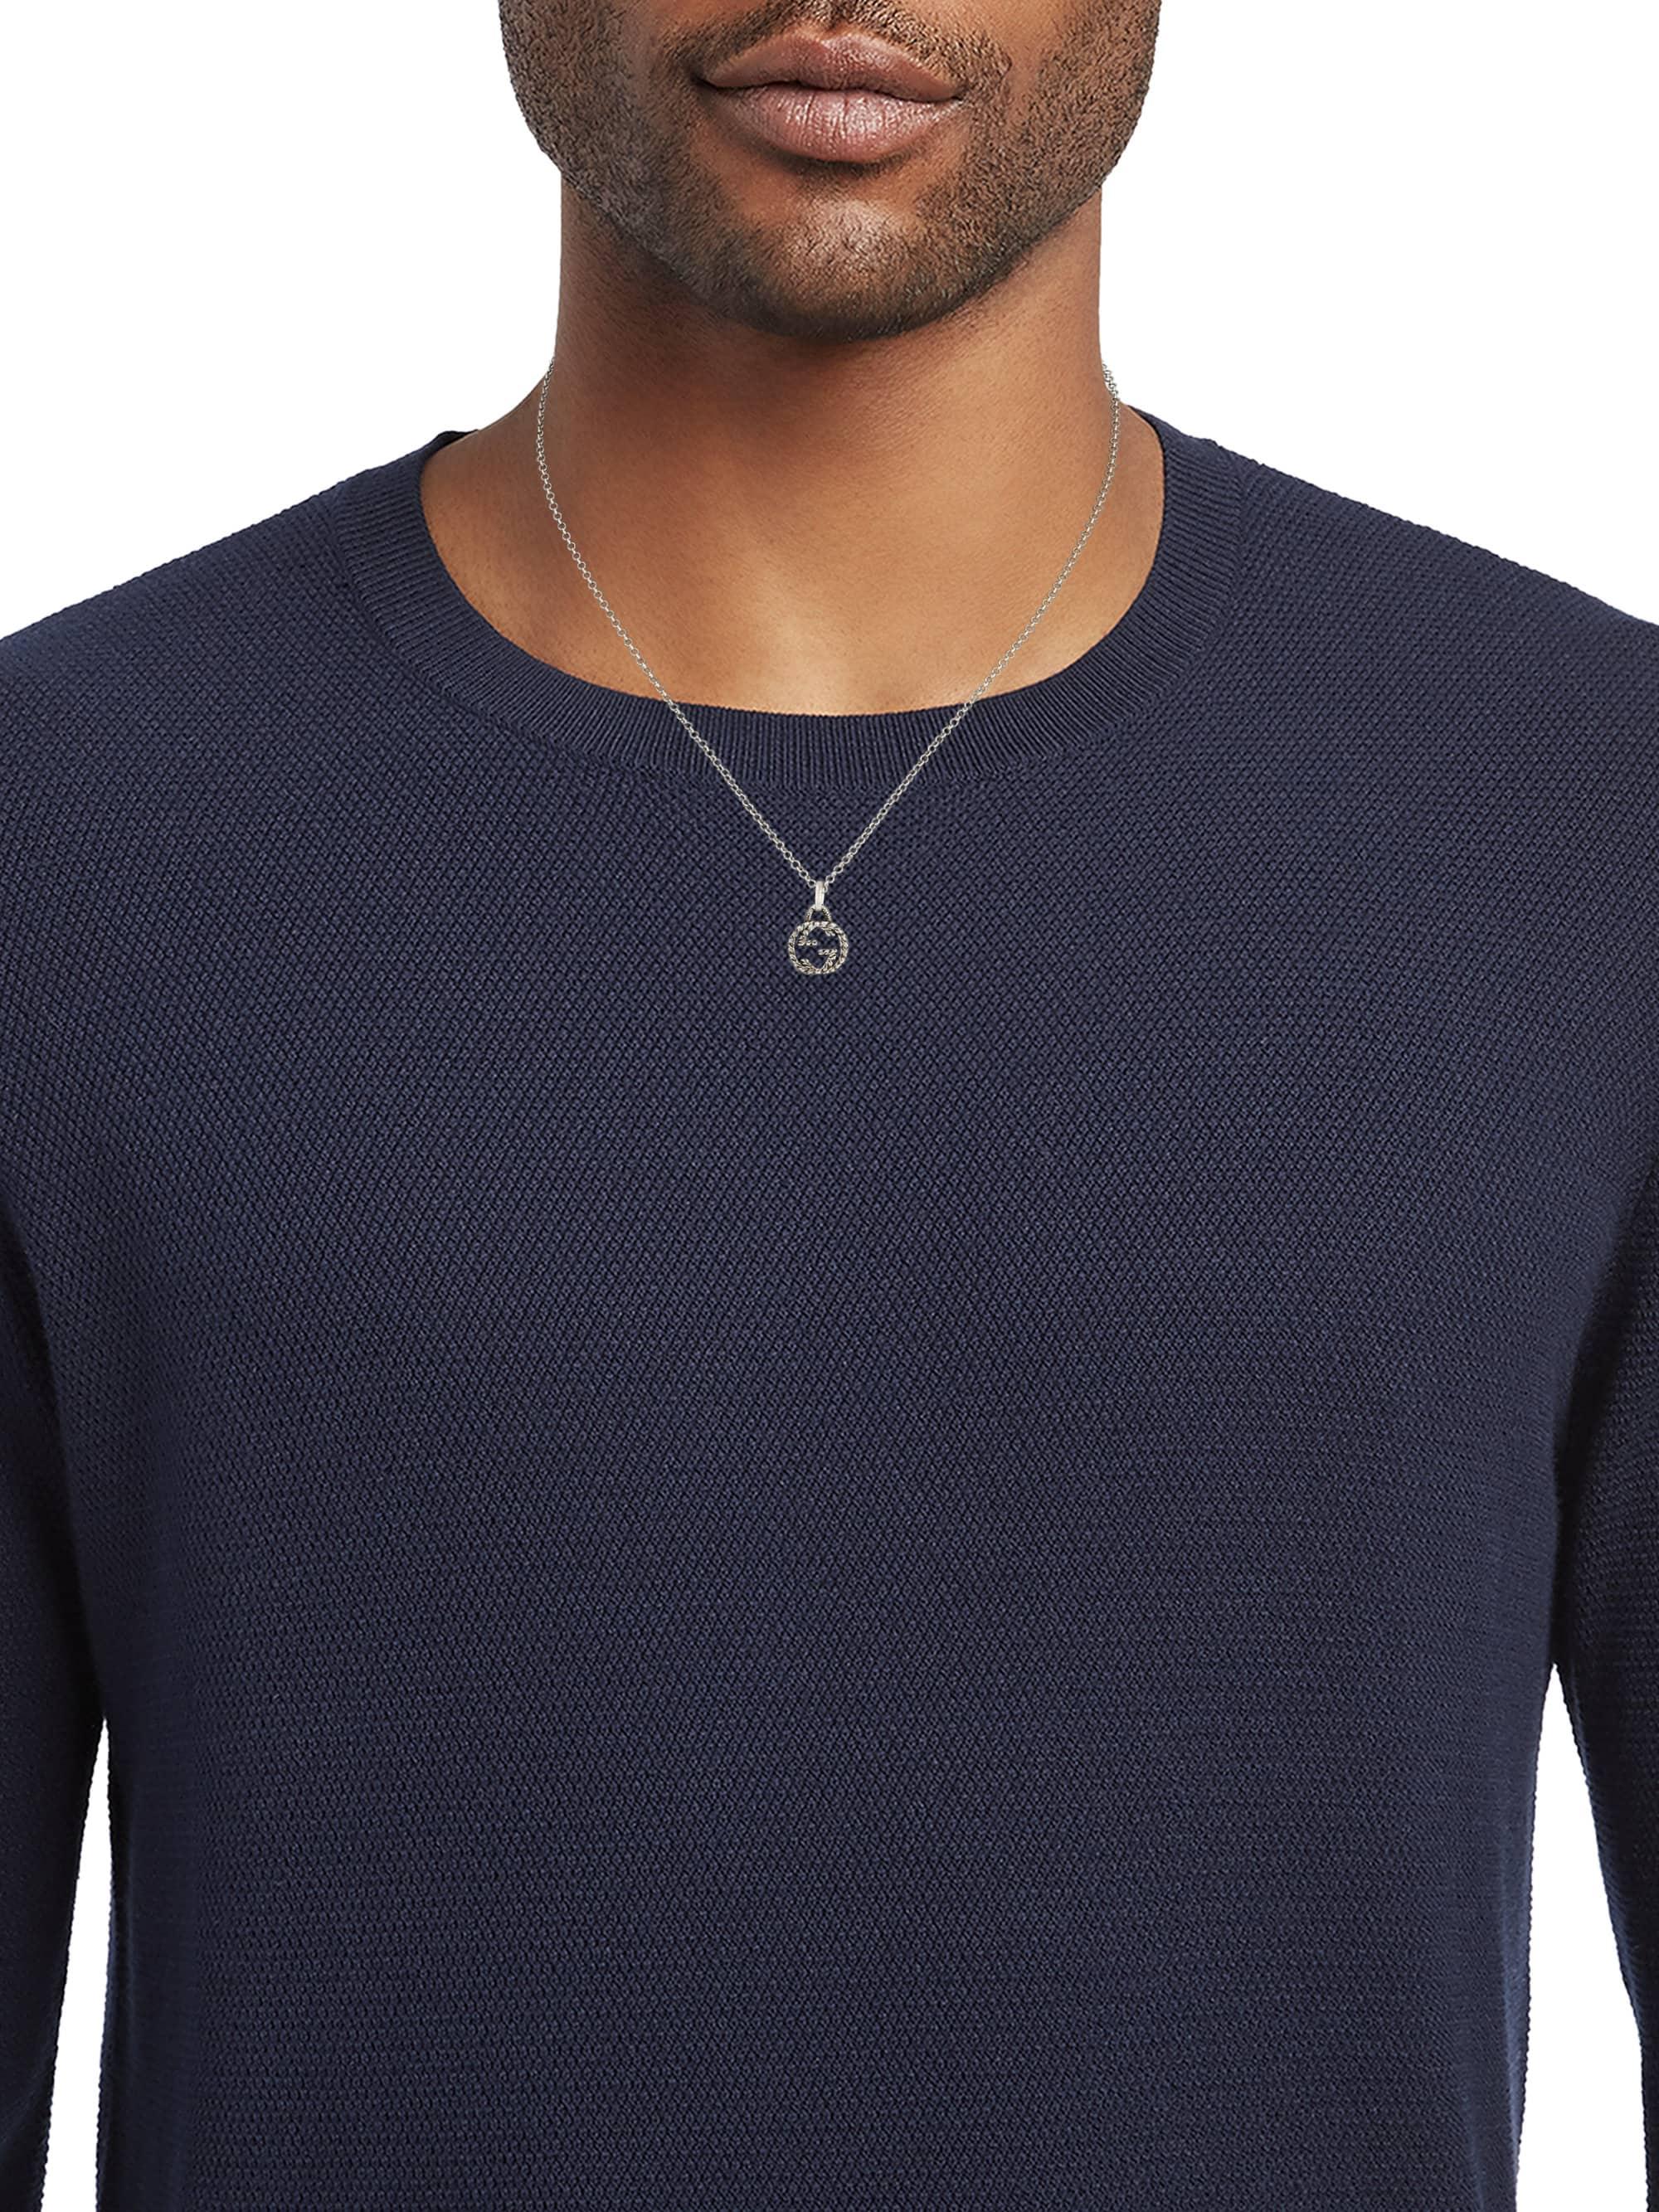 Gucci Interlocking-g Pendant Necklace in Metallic | Lyst